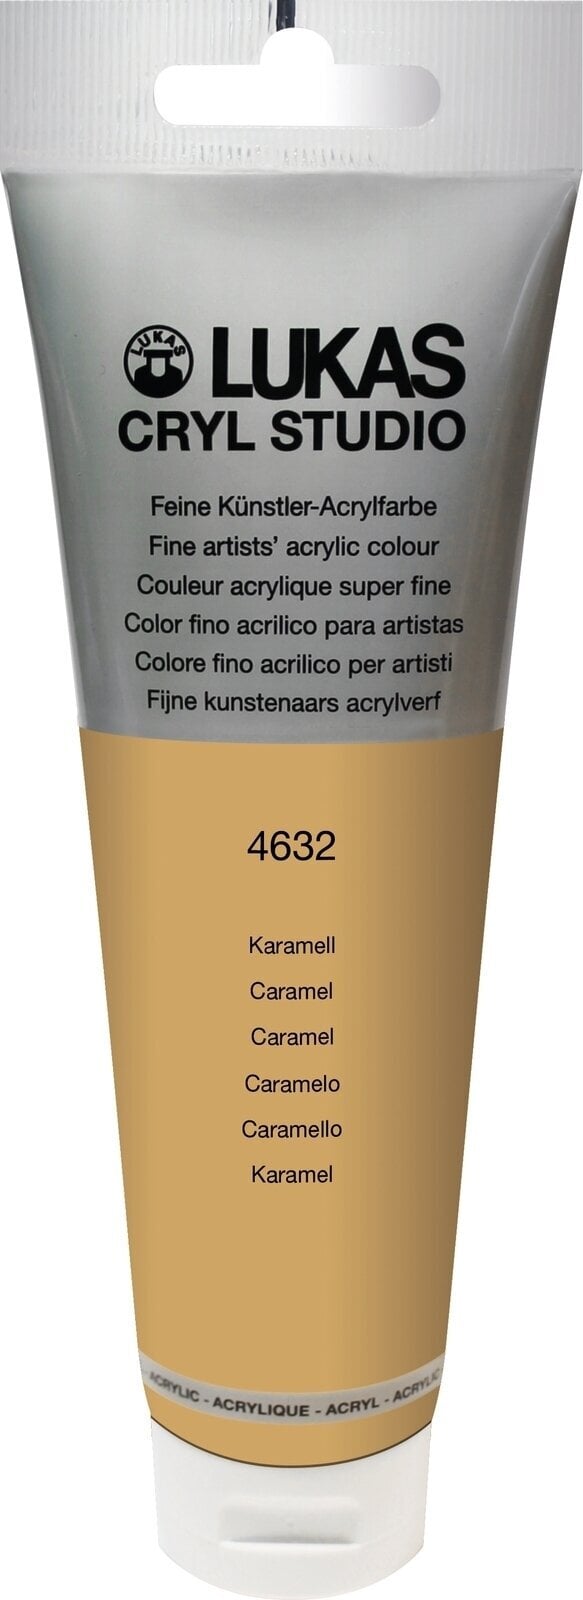 Akrylová farba Lukas Cryl Studio Acrylic Paint Plastic Tube Akrylová farba Karamel 125 ml 1 ks